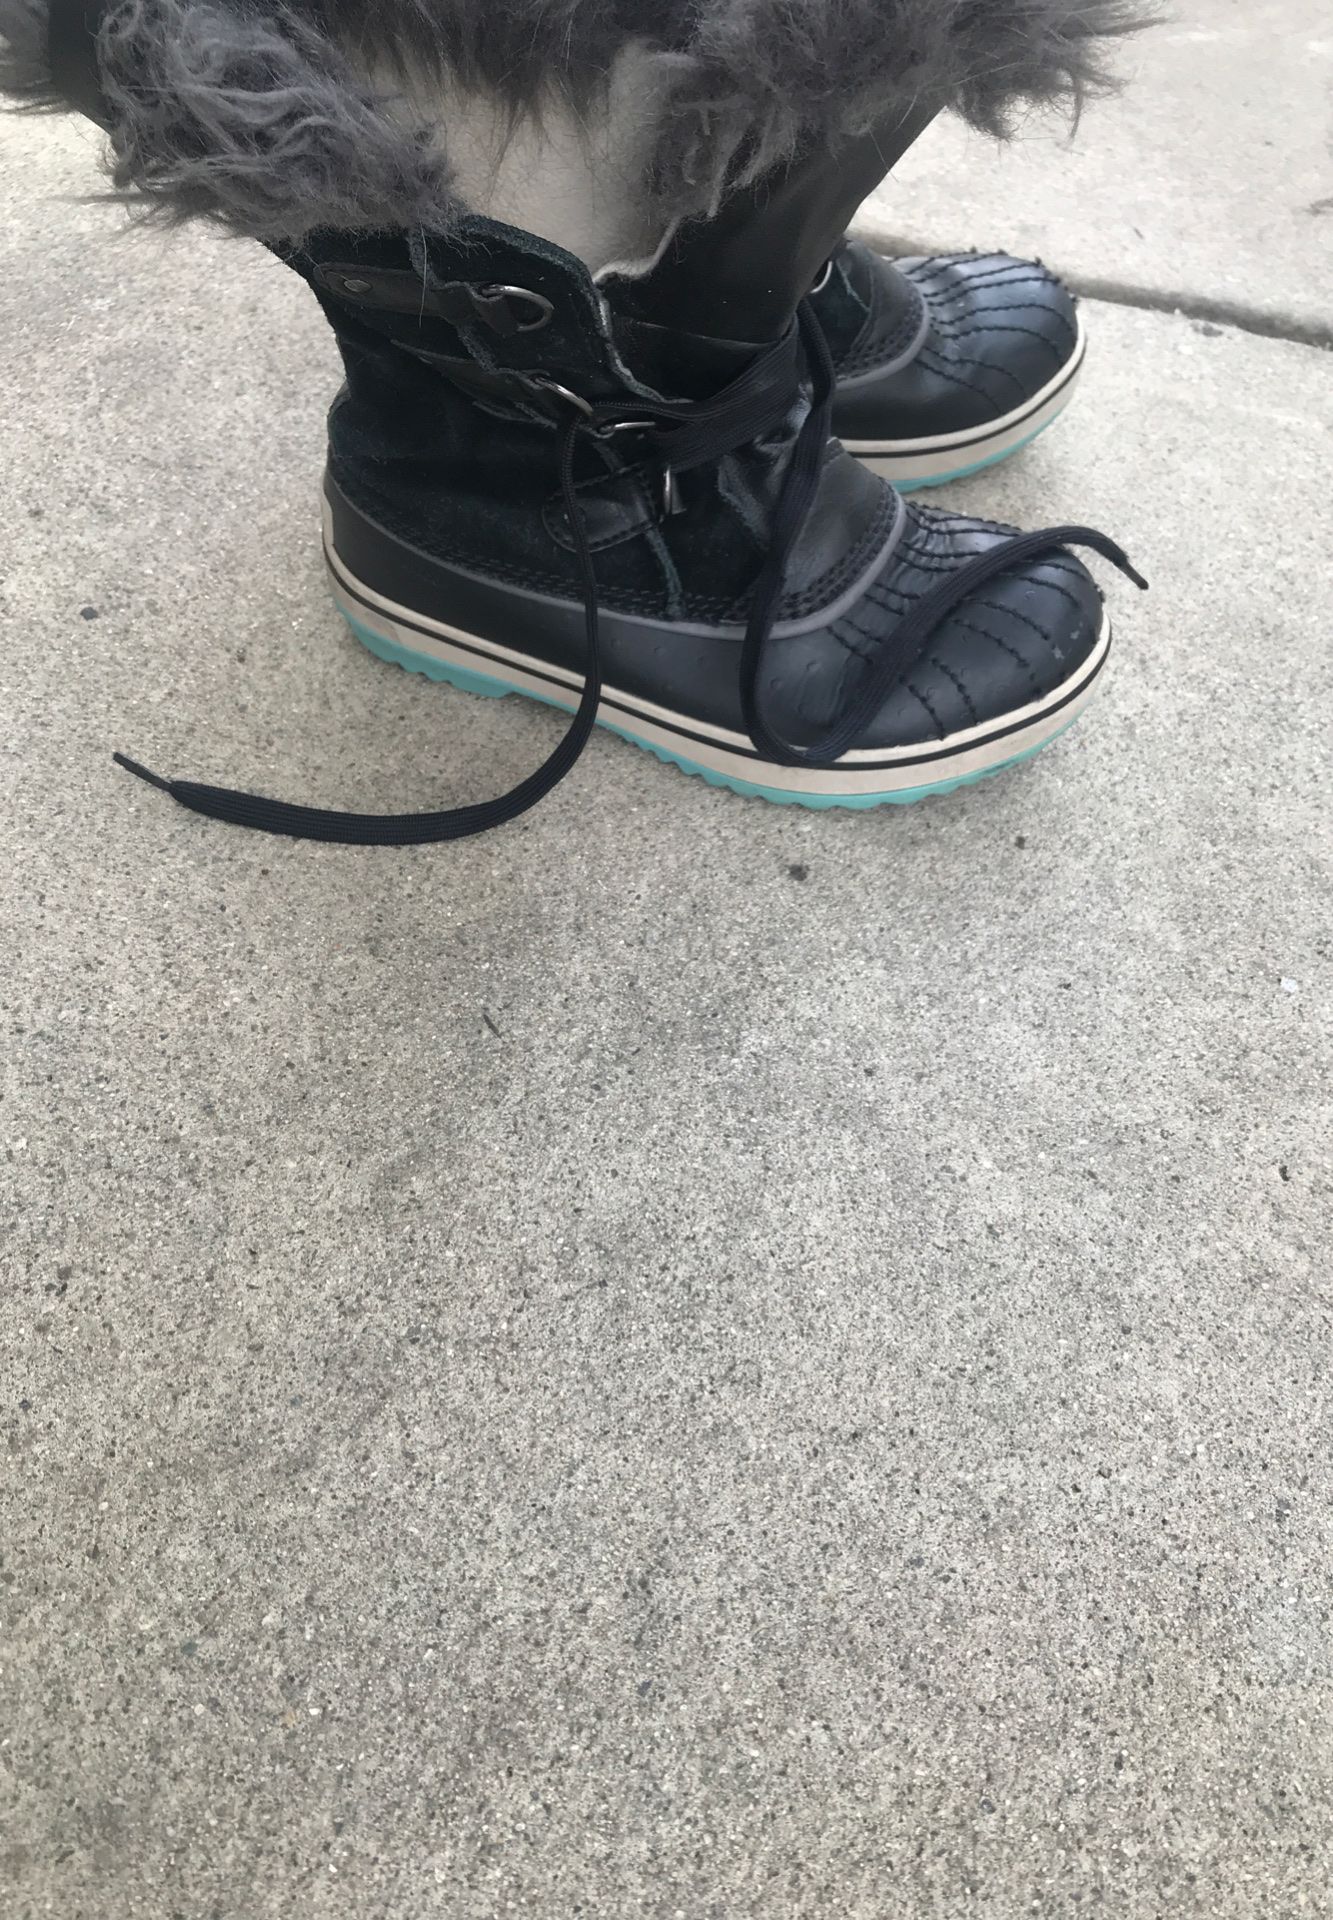 Sorel girl snow boots size 3